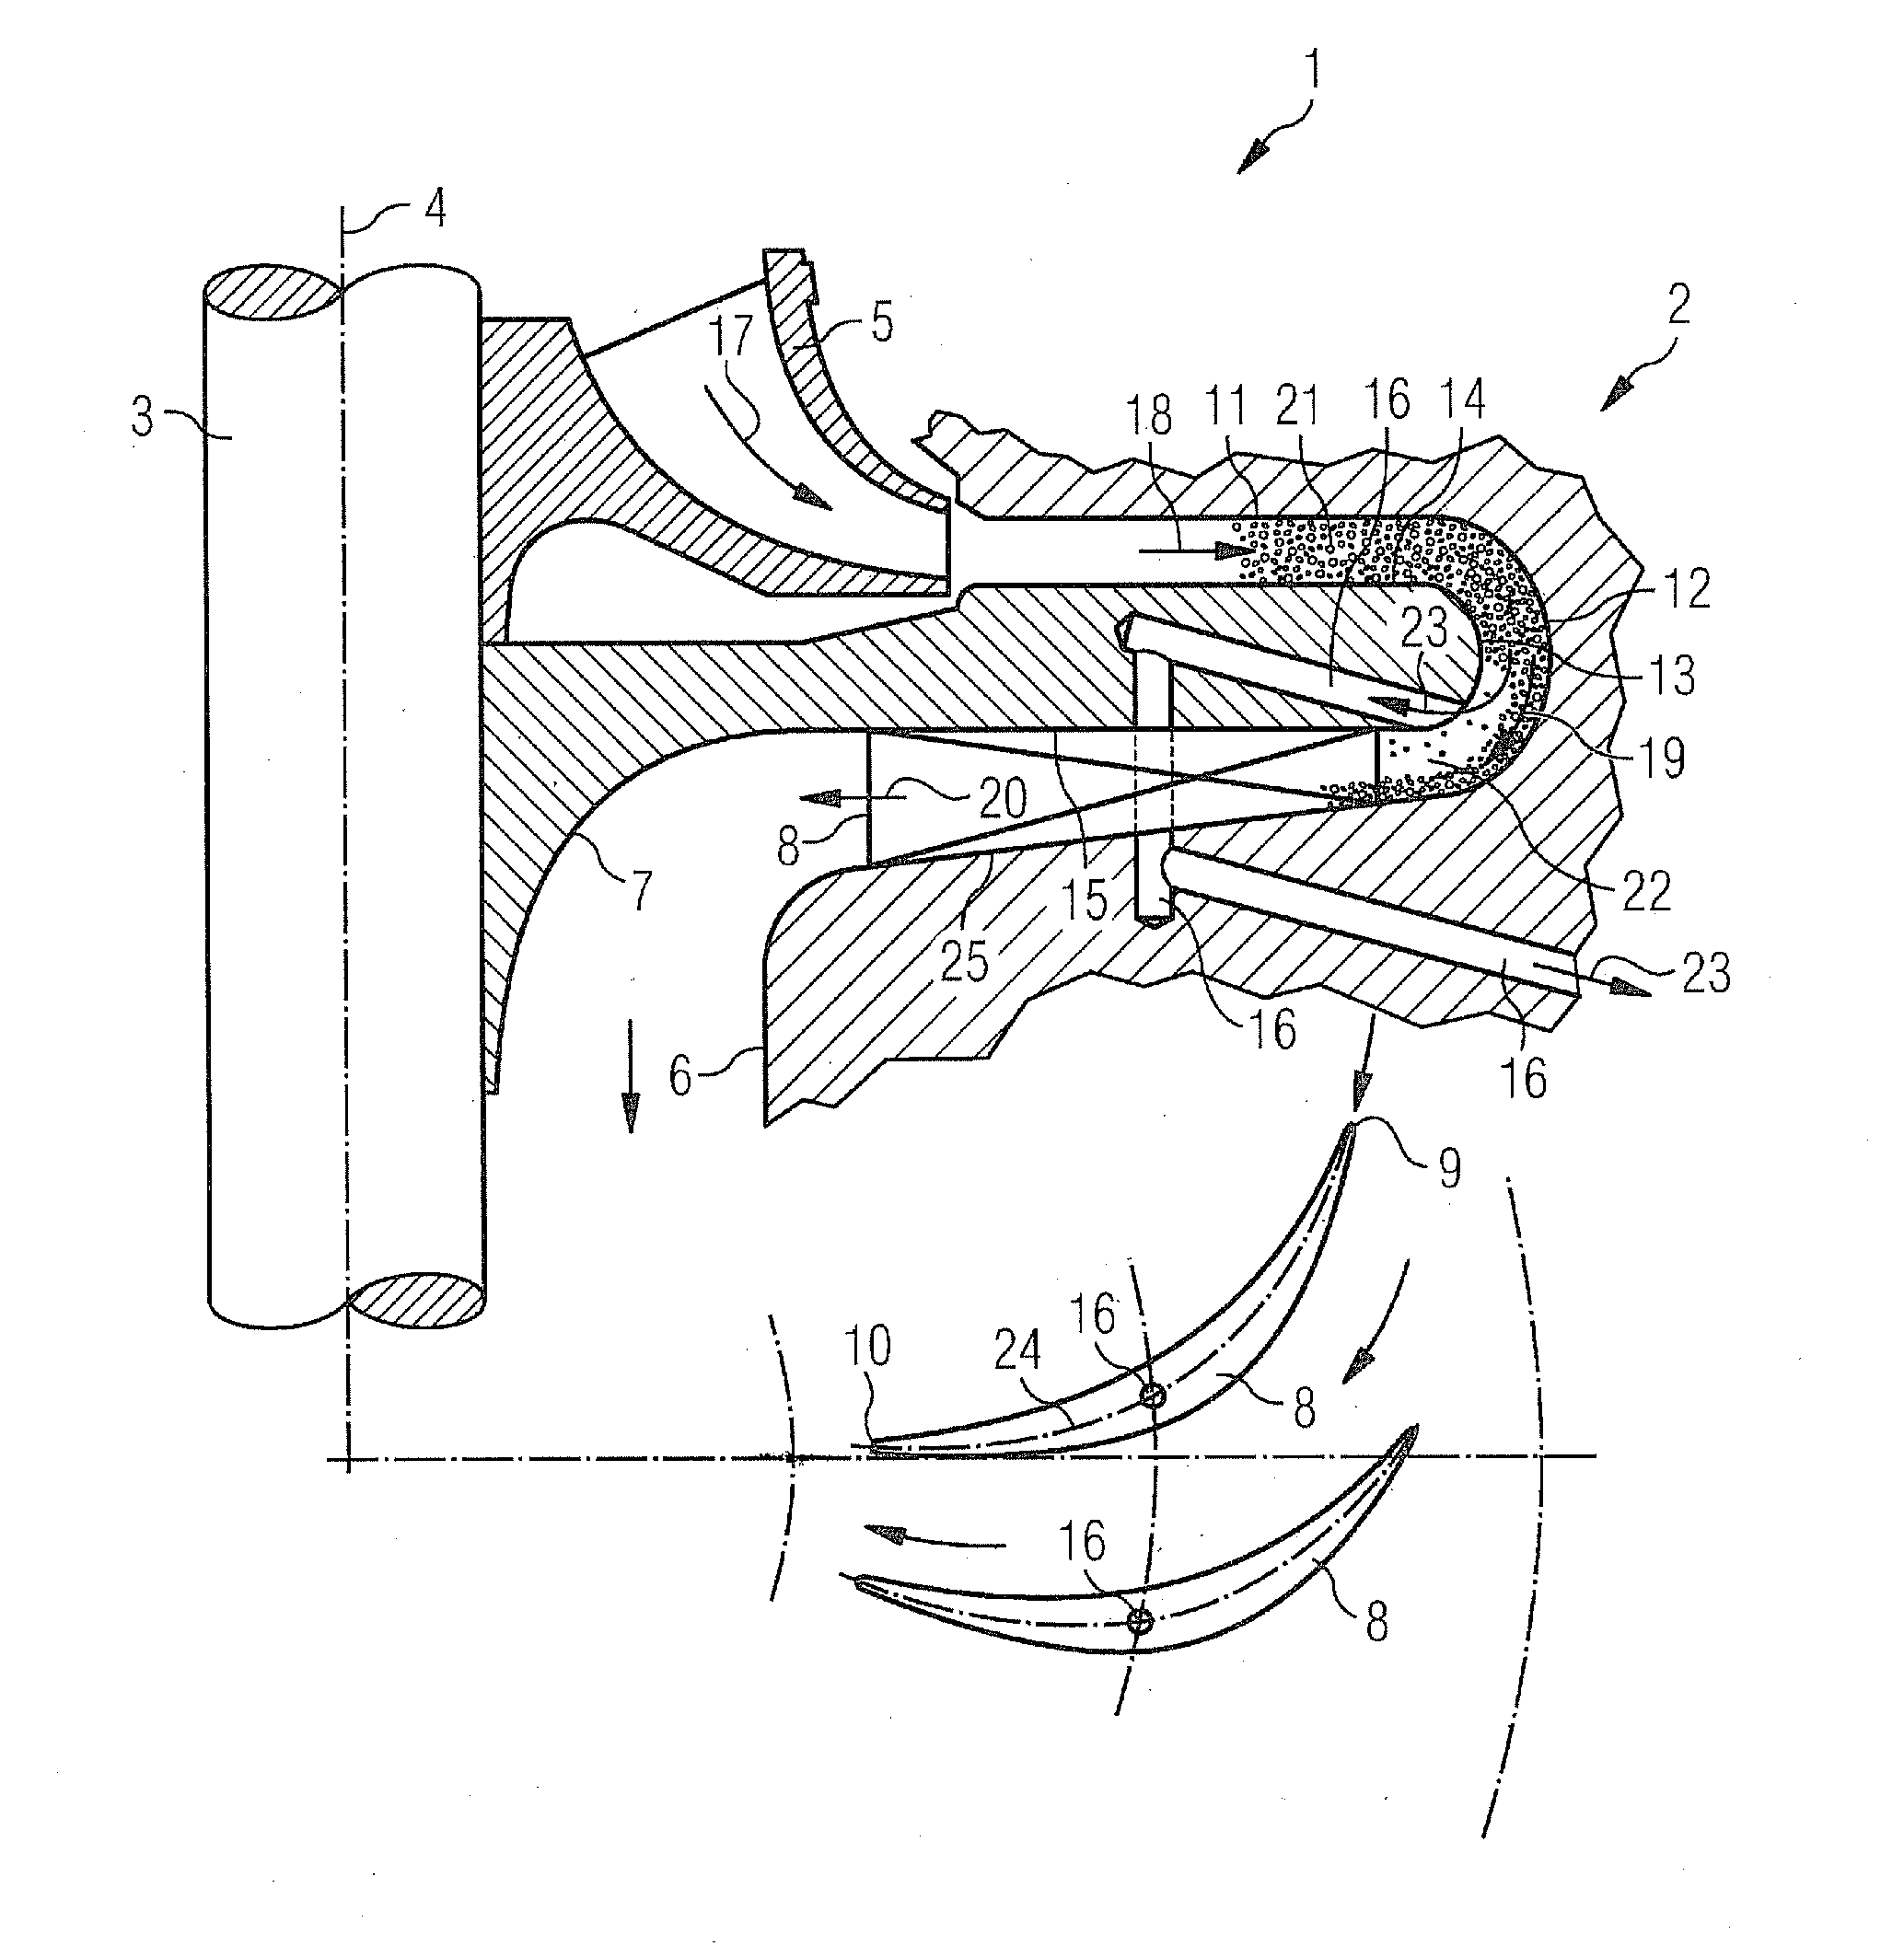 Intermediate floor for a radial turbine engine